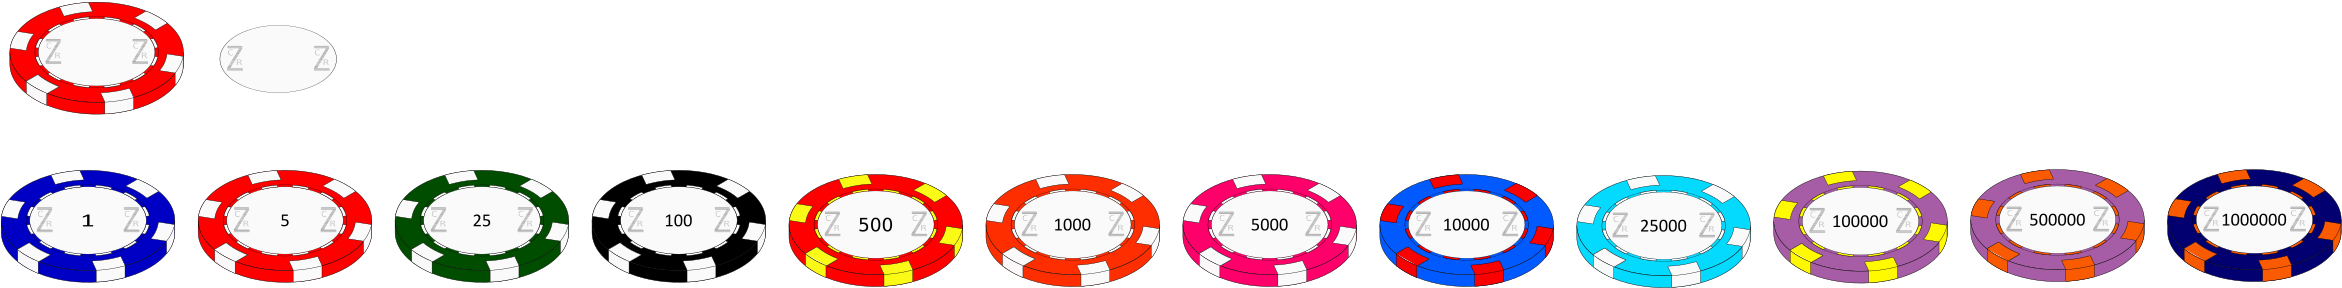 Casino Chips - Circle (2400x323)